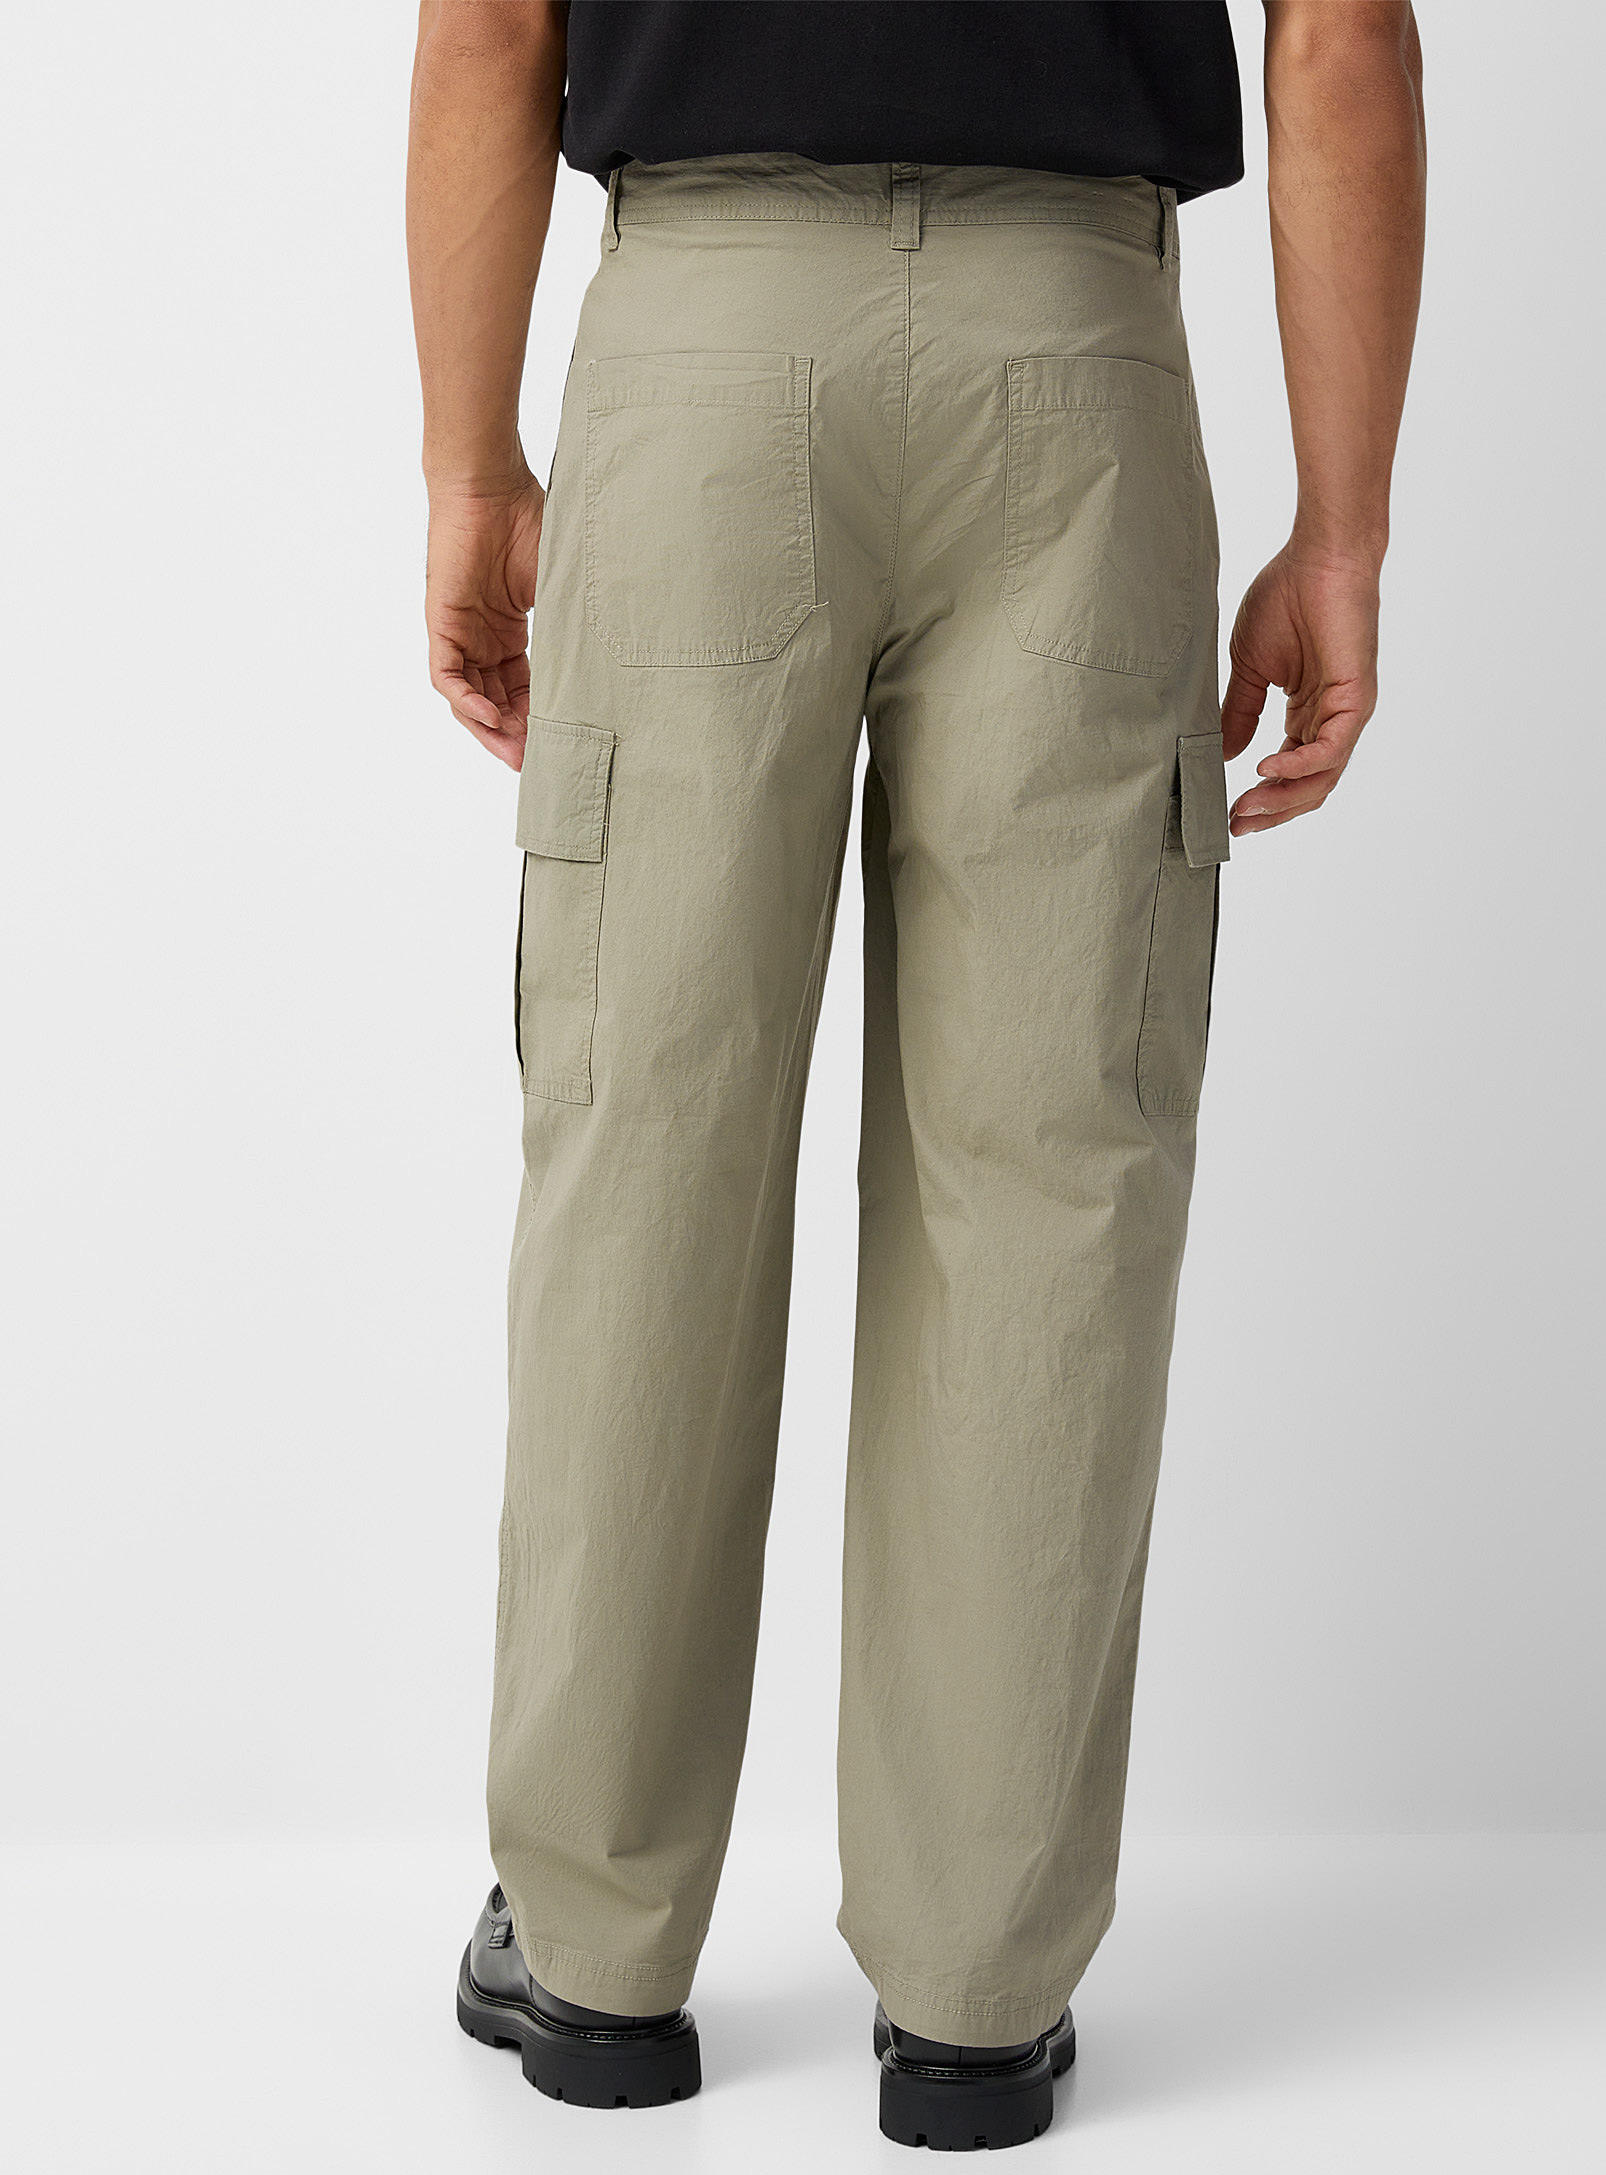 Selected - Le pantalon popeline poches cargo